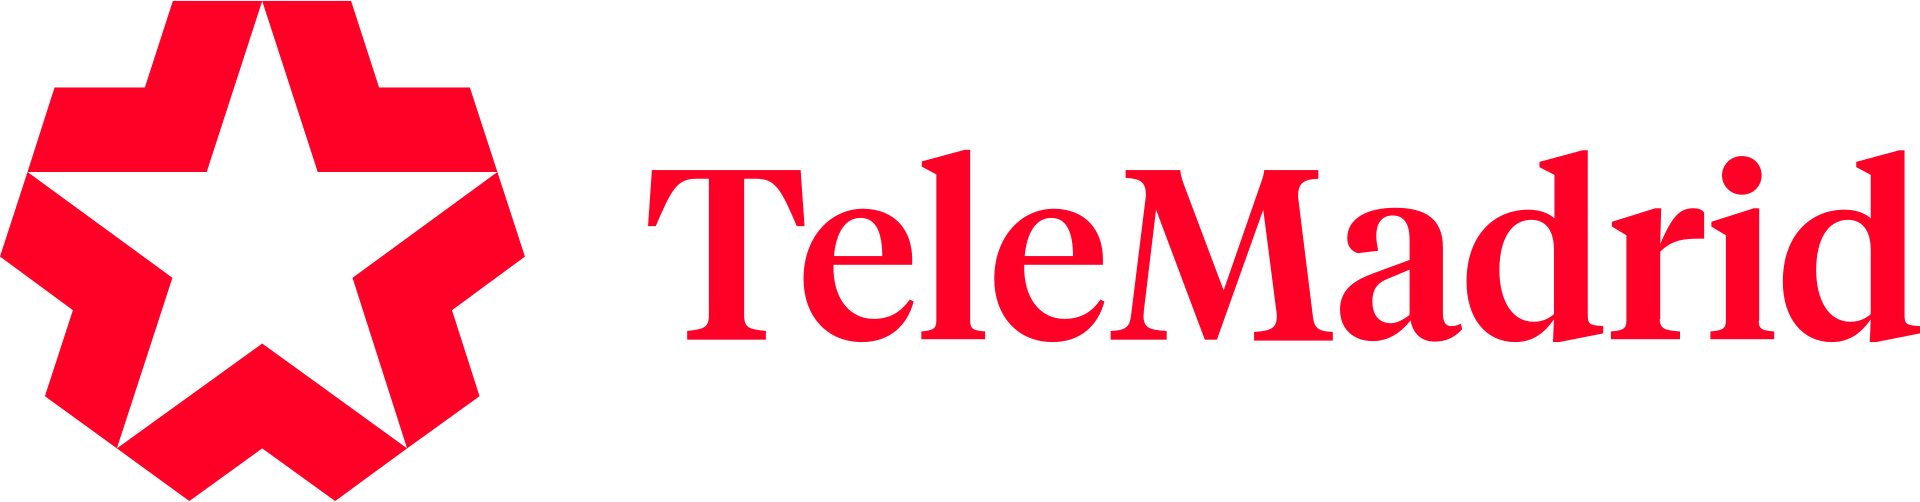 Telemadrid TV Logo